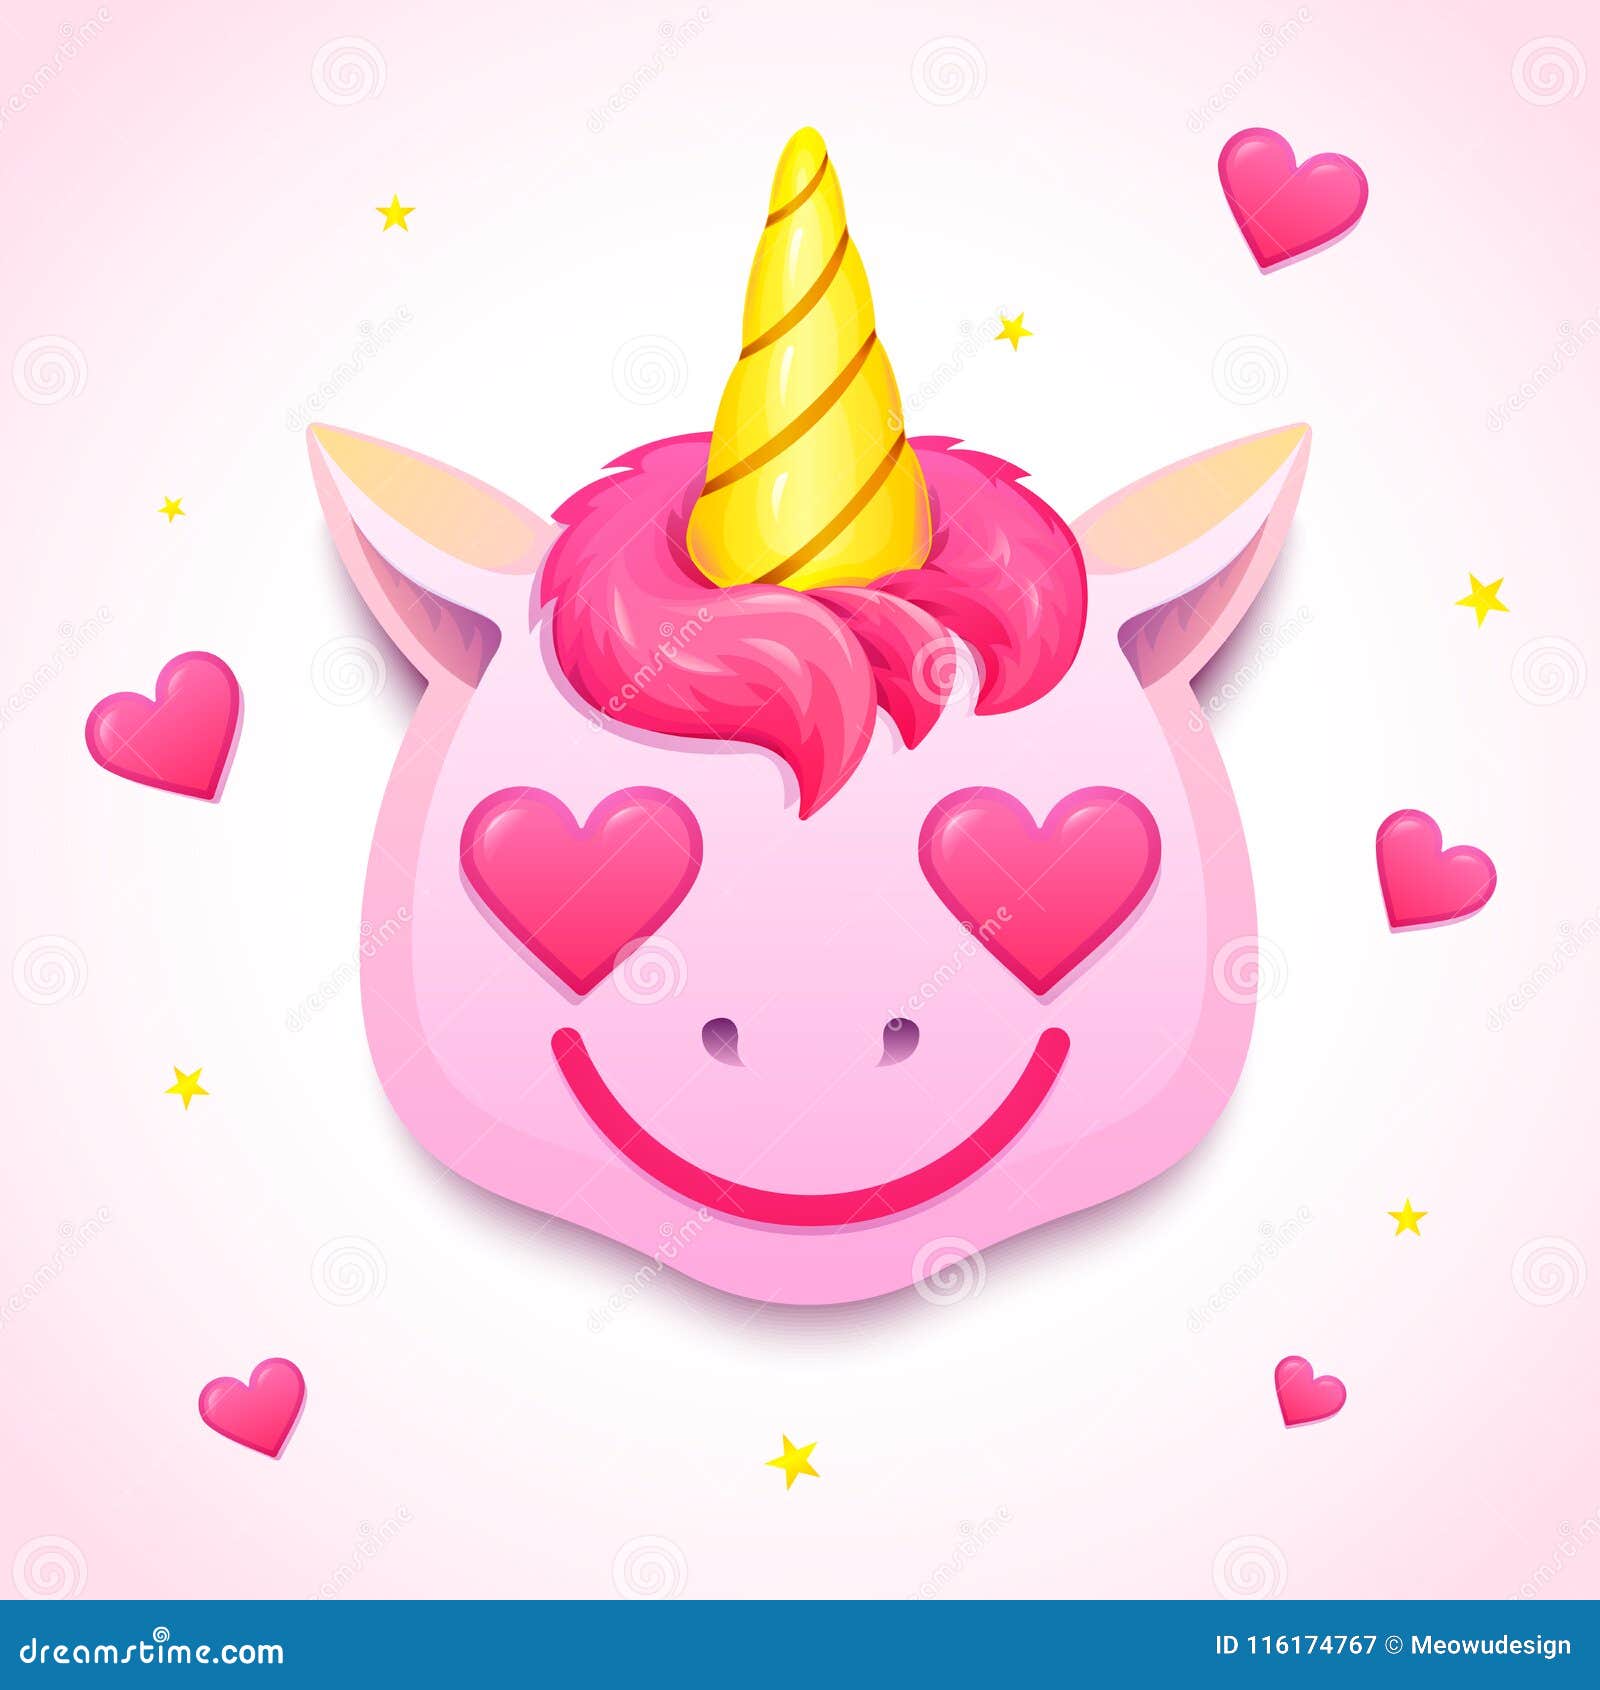 The Sound - Página 7 Emoji-cute-pink-unicorn-hearts-eyes-face-character-fell-love-emotion-vector-illustration-116174767